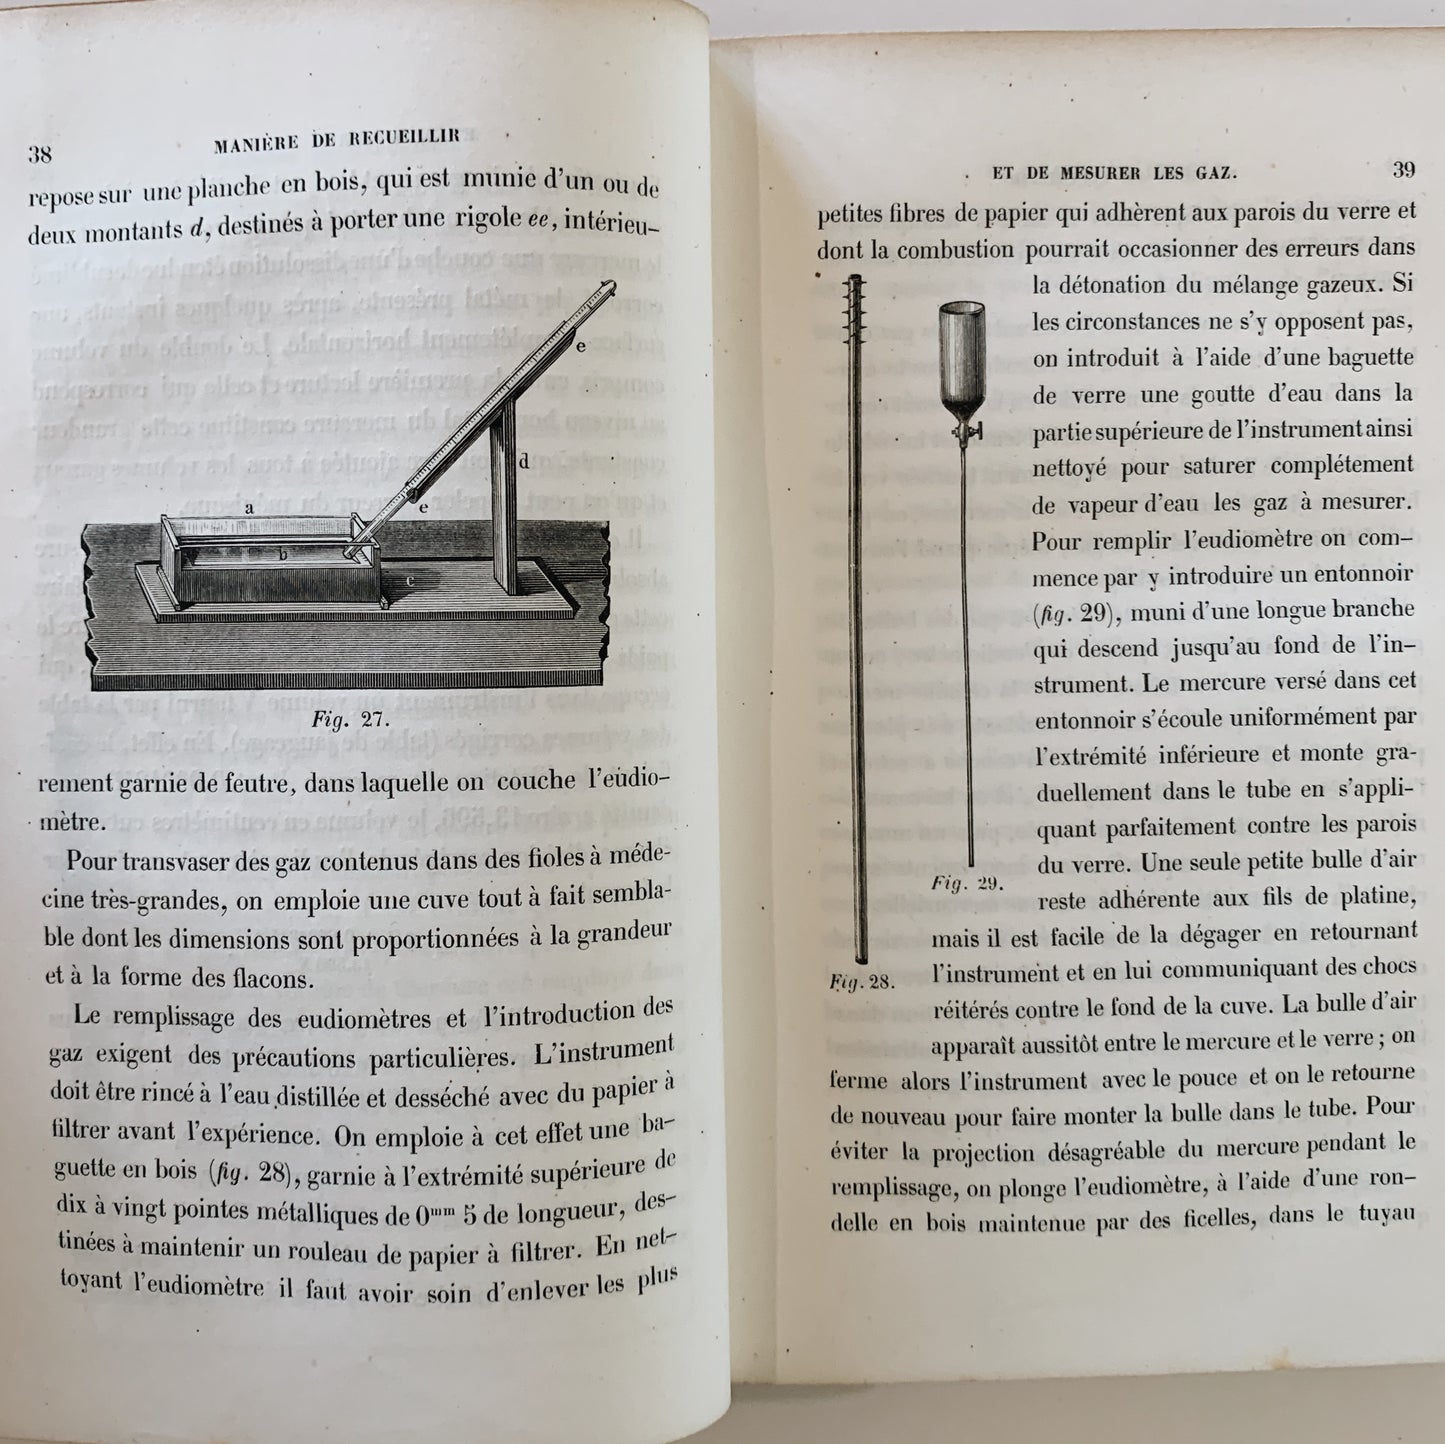 Methodes Gazometriques, Robert Bunsen, 1858, Illustrated, Rare